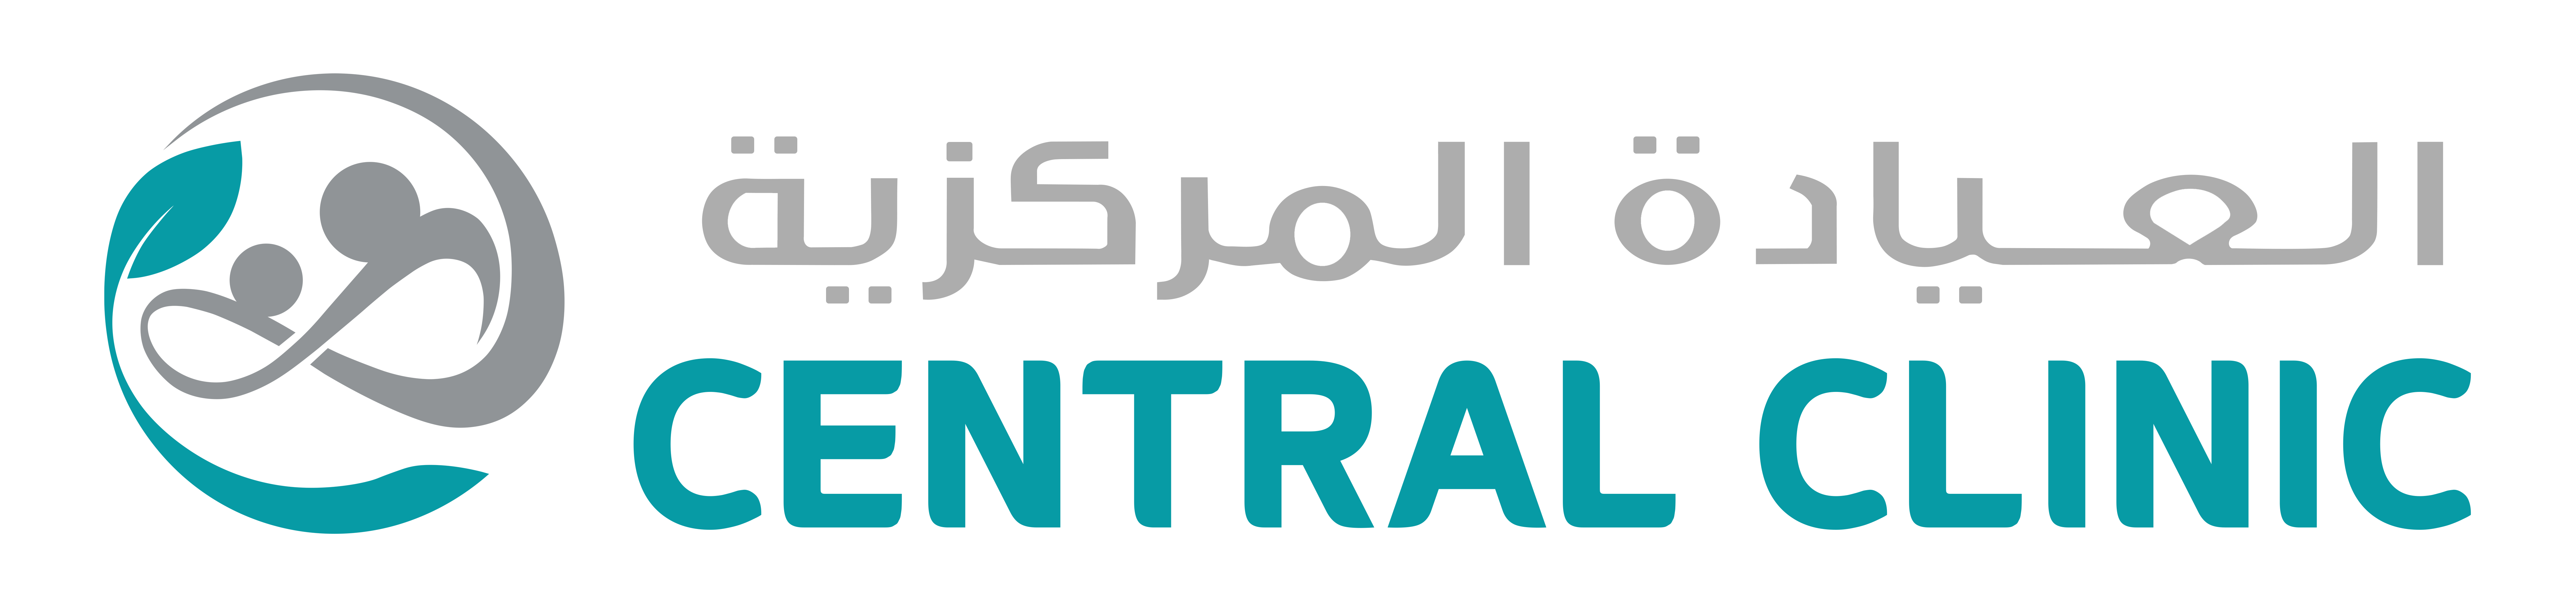 Central Clinic Logo